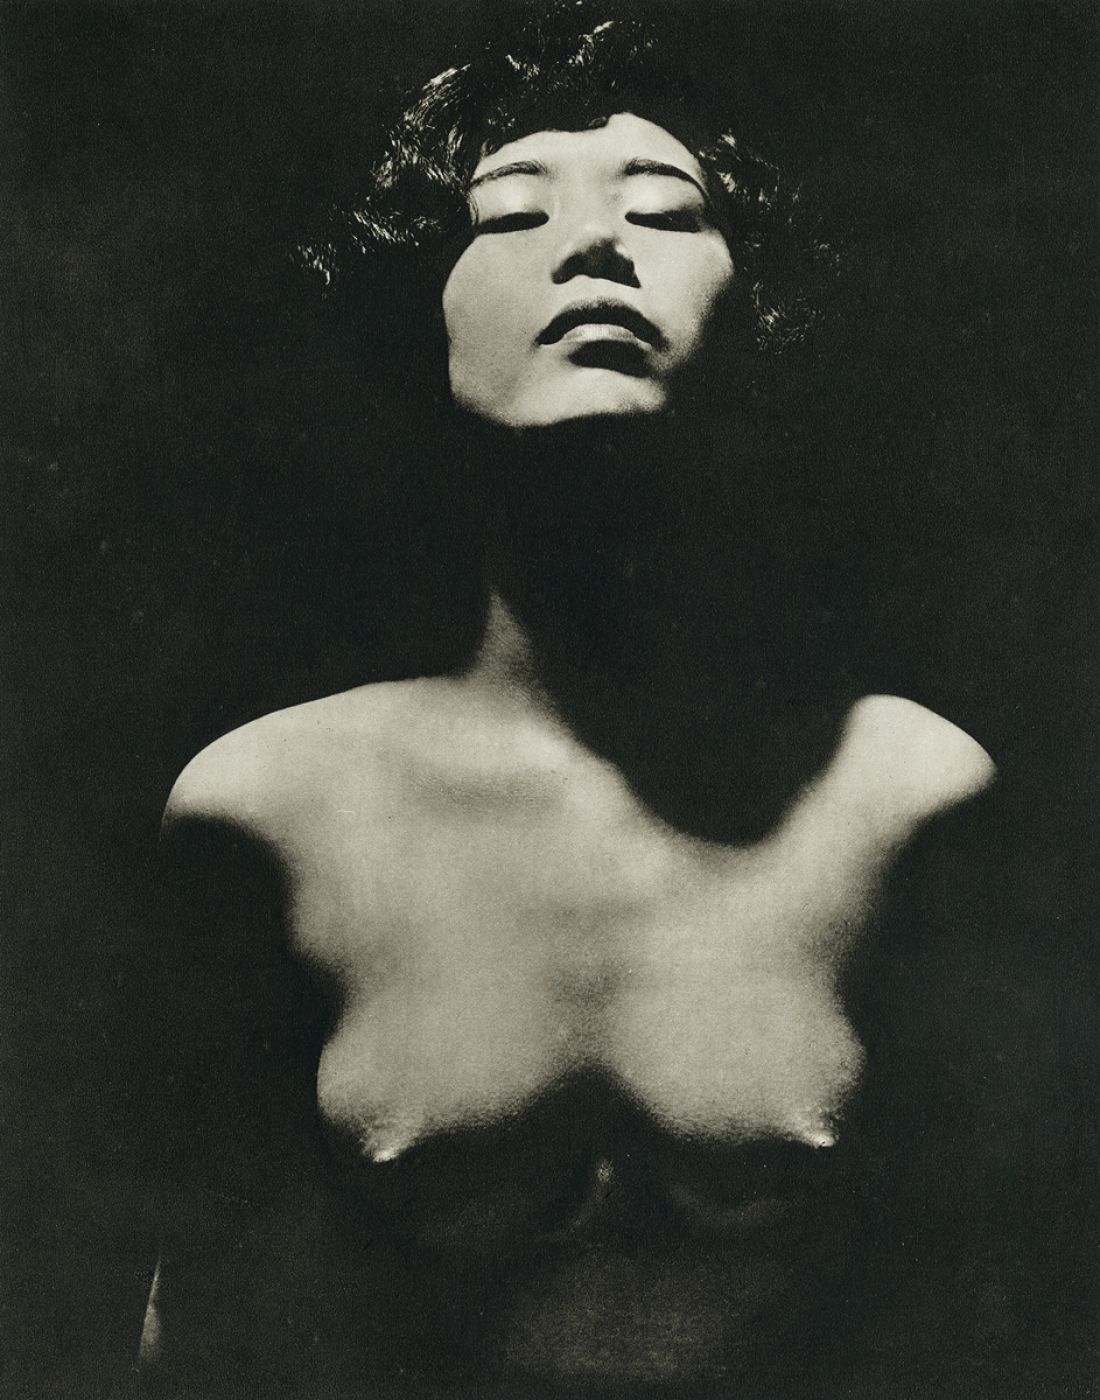 John Everard, “Female Nude Study”, 1950 ca.